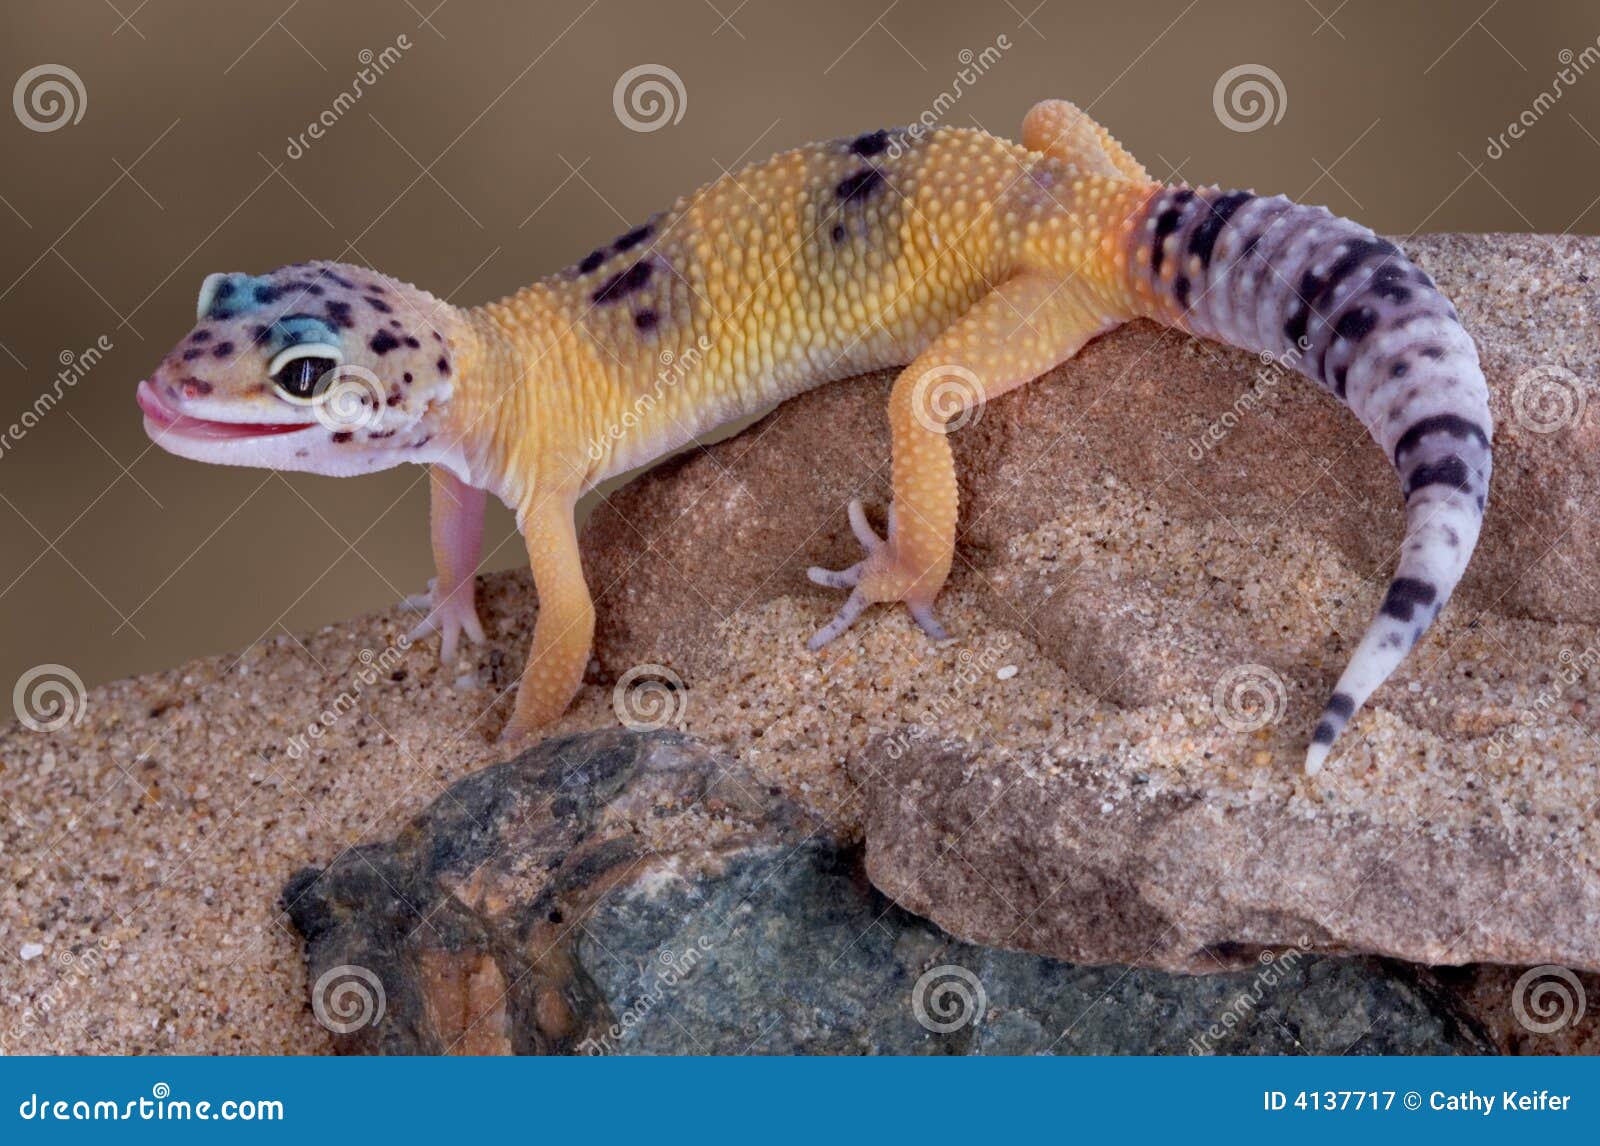 Image result for leopard gecko free images